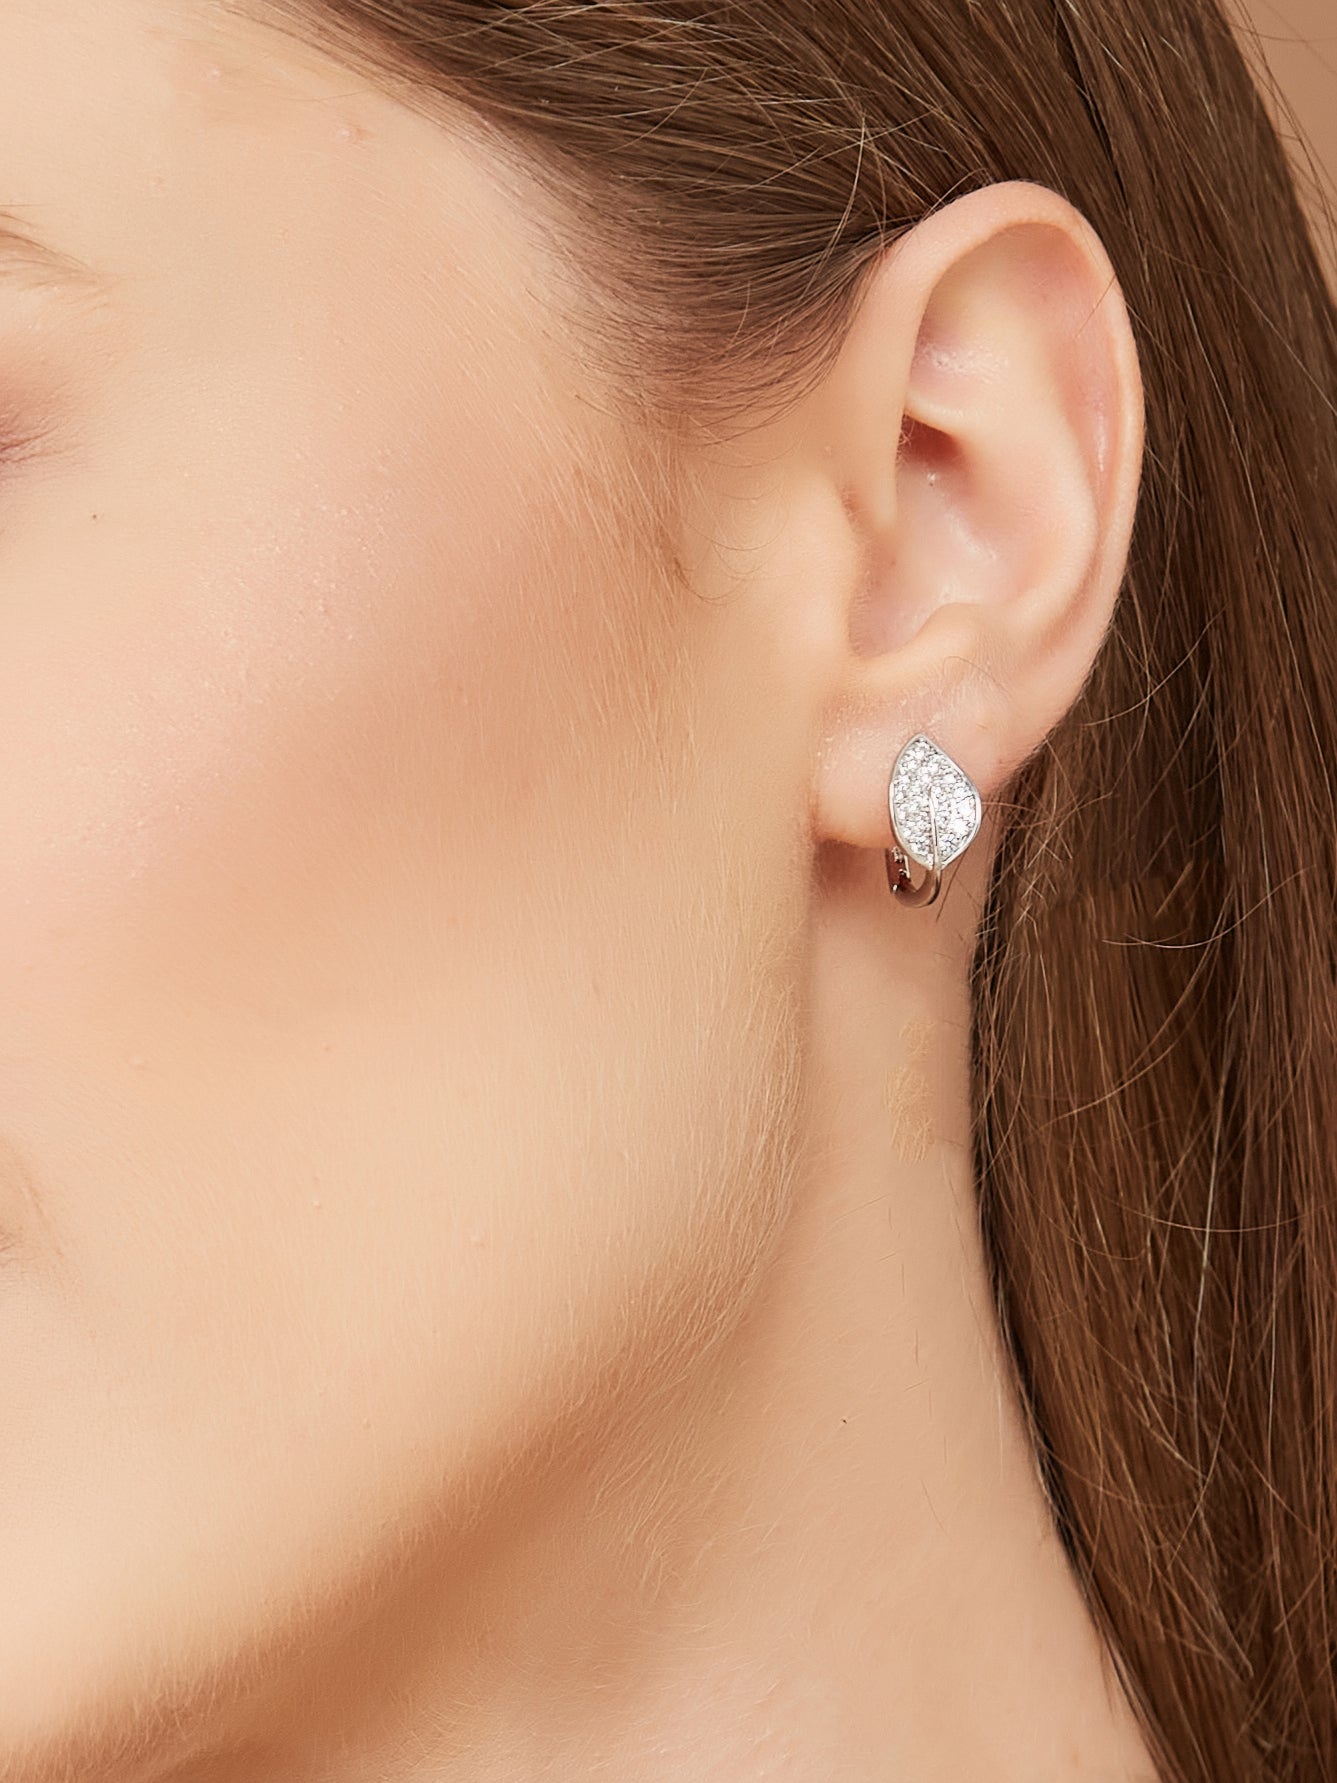 Leave Design Silver Stud earrings for women & girls